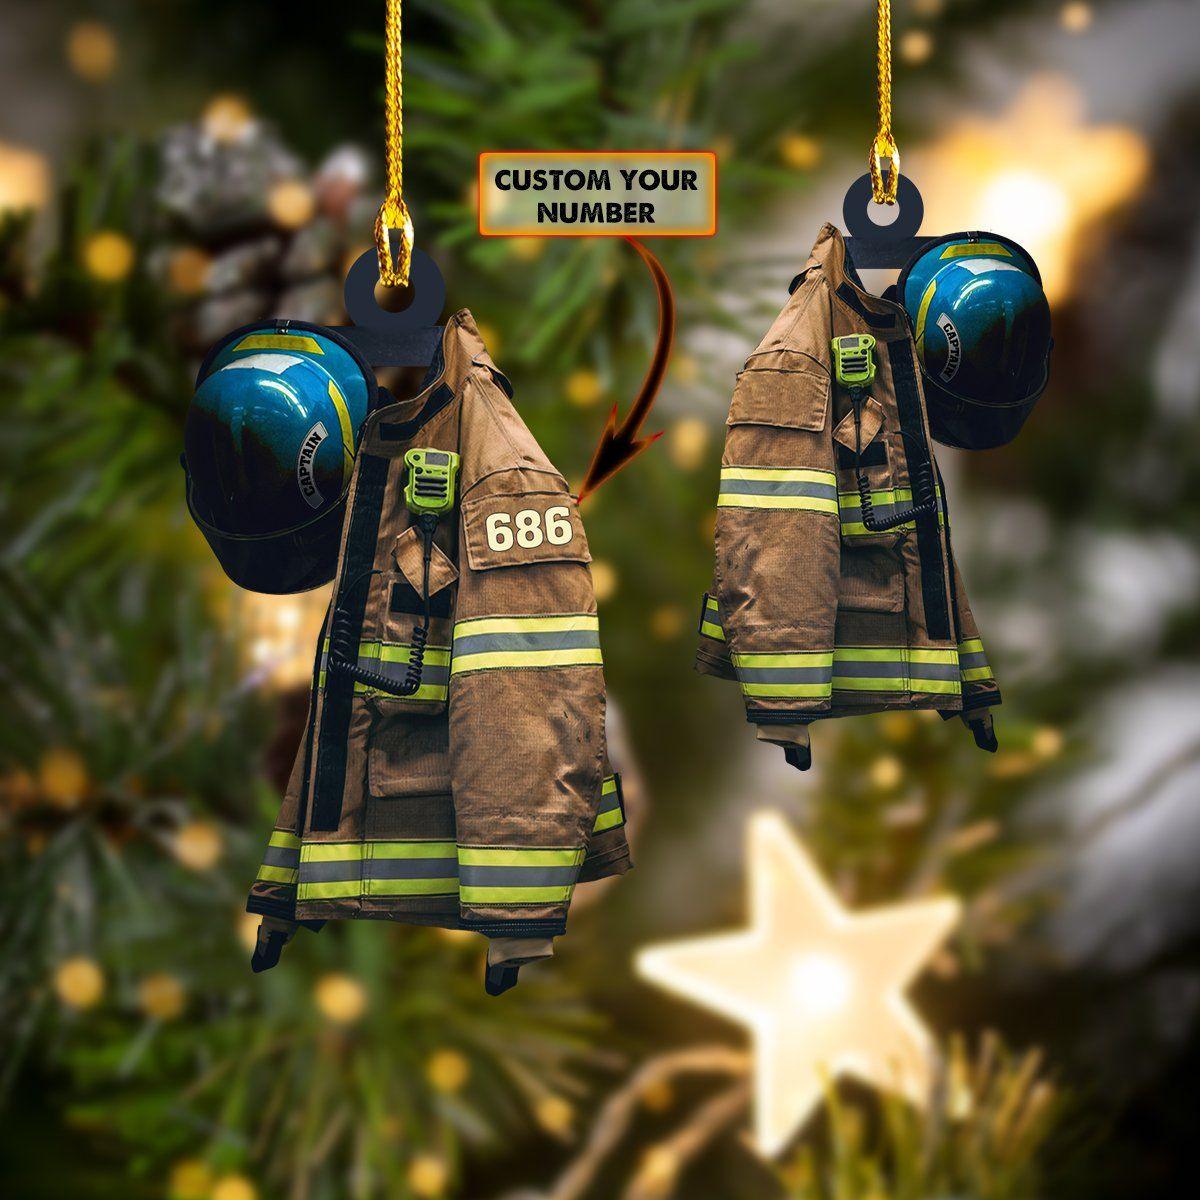 giftngon - Personalized Firefighter CAPTAIN BLUE HELMET |Custom Shaped Ornament | Custom Number New